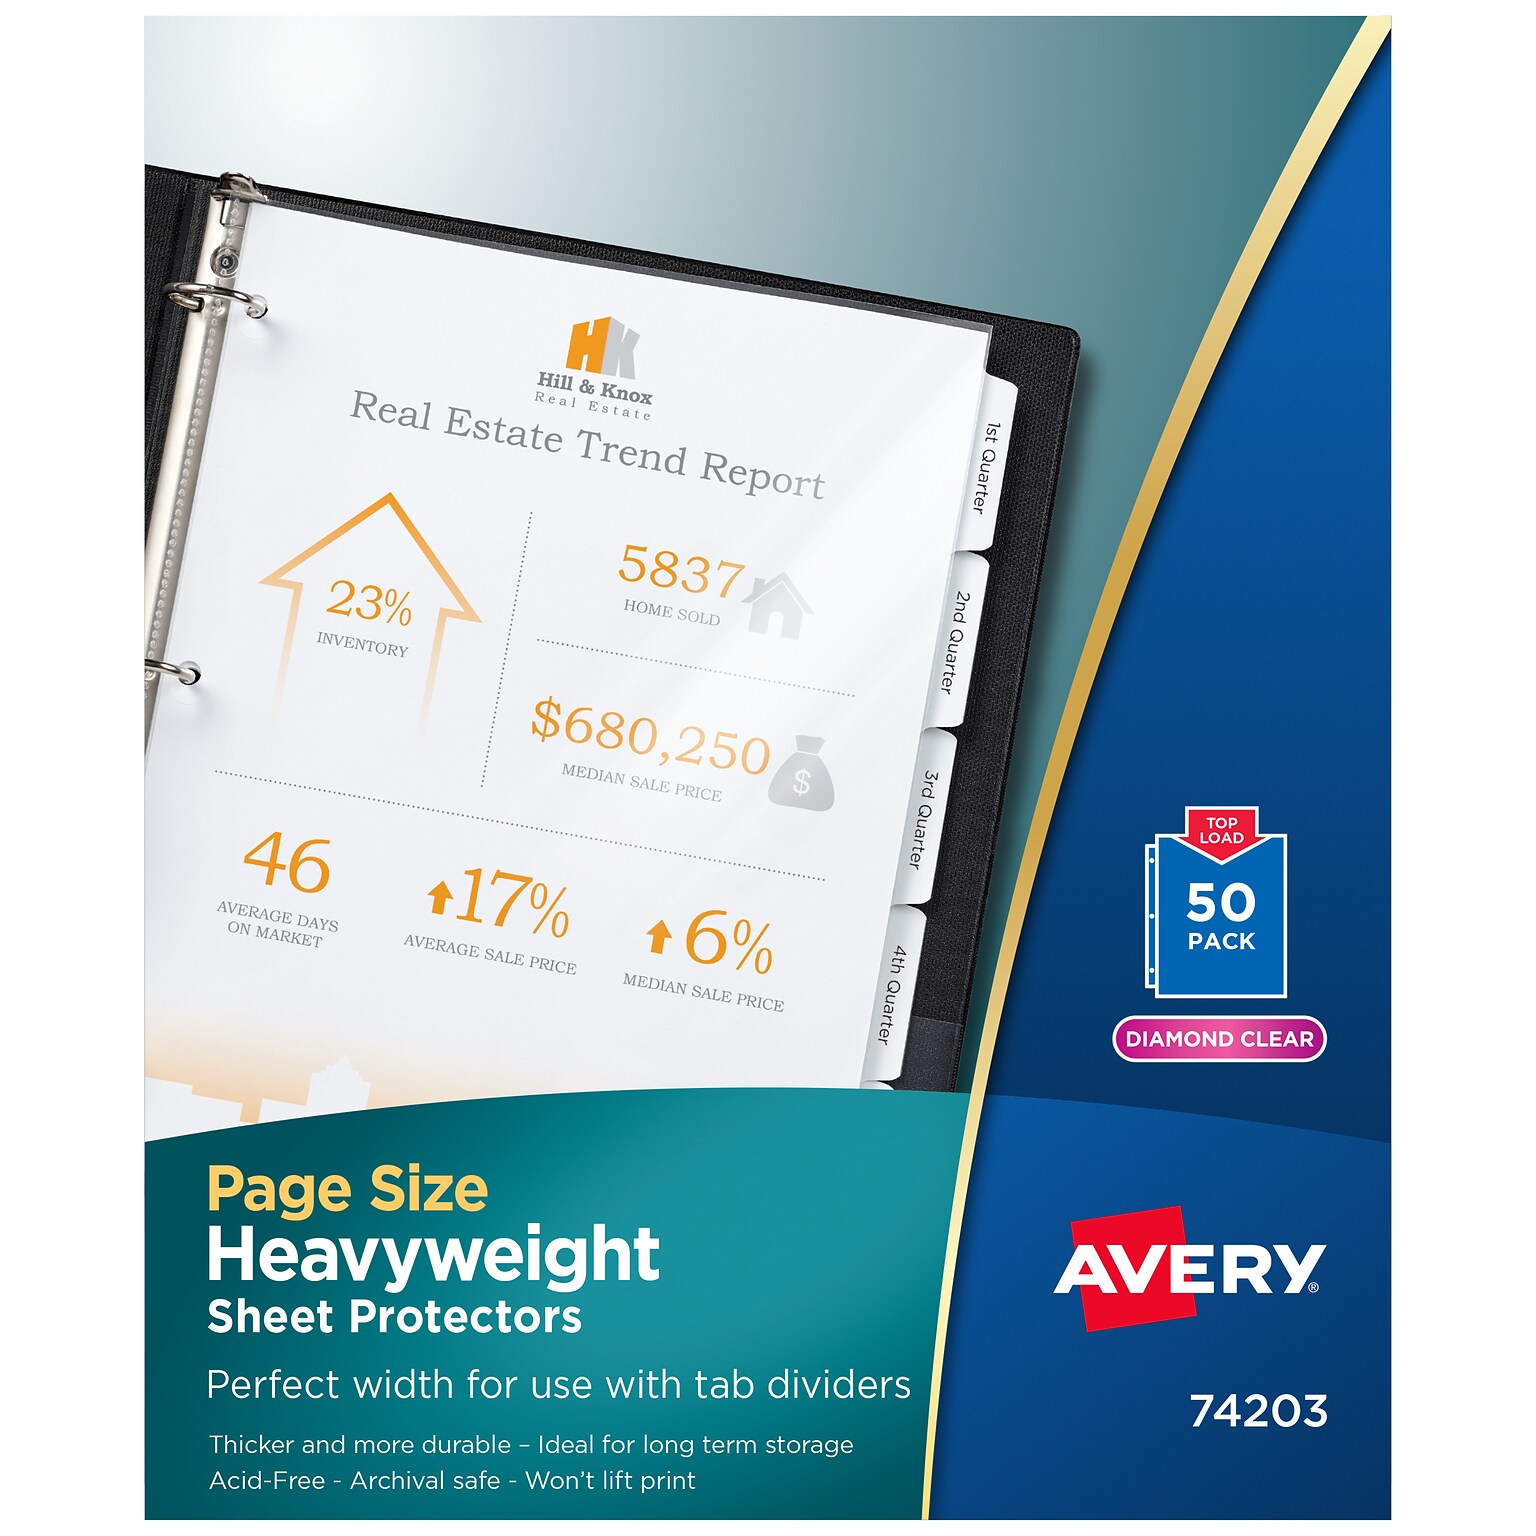 Avery Page Size Heavyweight Sheet Protectors, 8.5 x 11, Diamond Clear, 50/Box (74203)